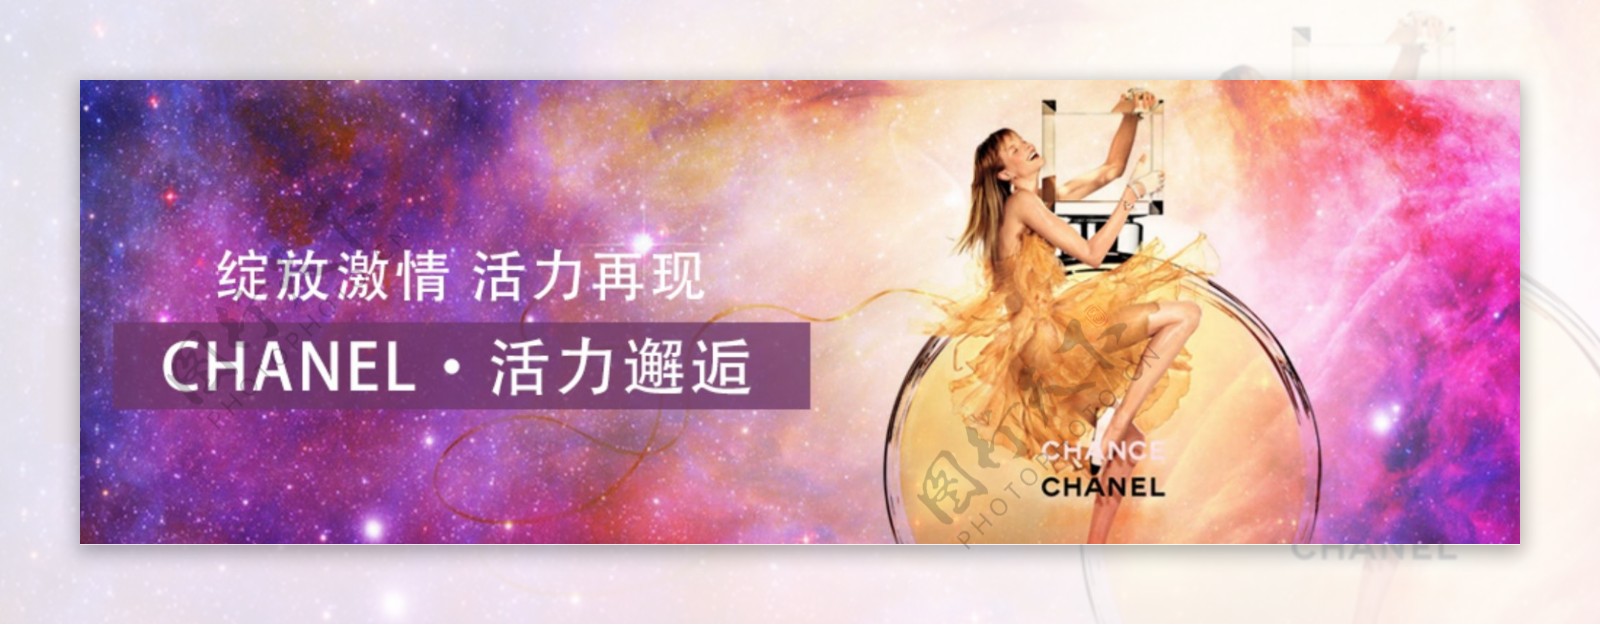 电商香水banner设计广告图